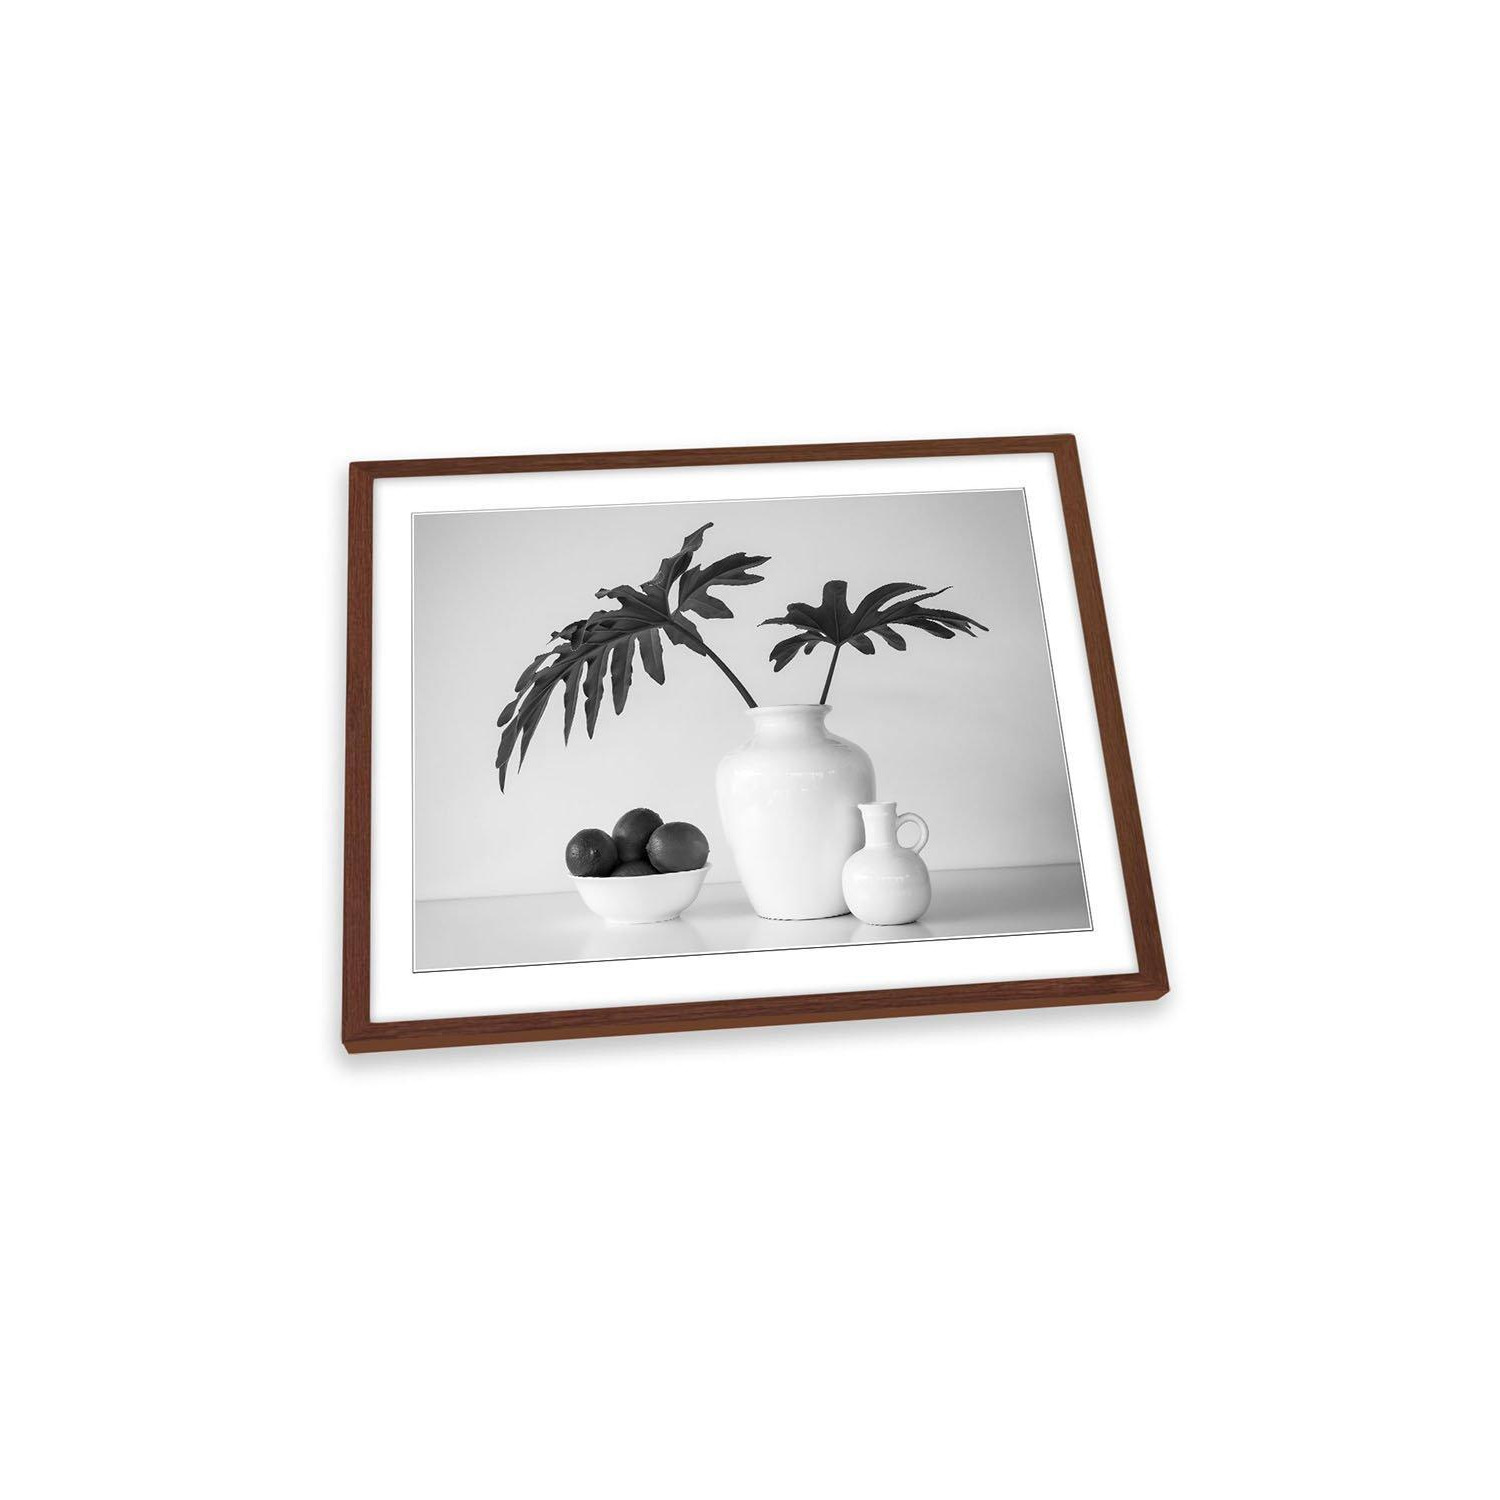 Tropical Leaves Still Life Vase Grey Framed Art Print Picture Wall Artwork - (W)35cm x (H)26cm - image 1